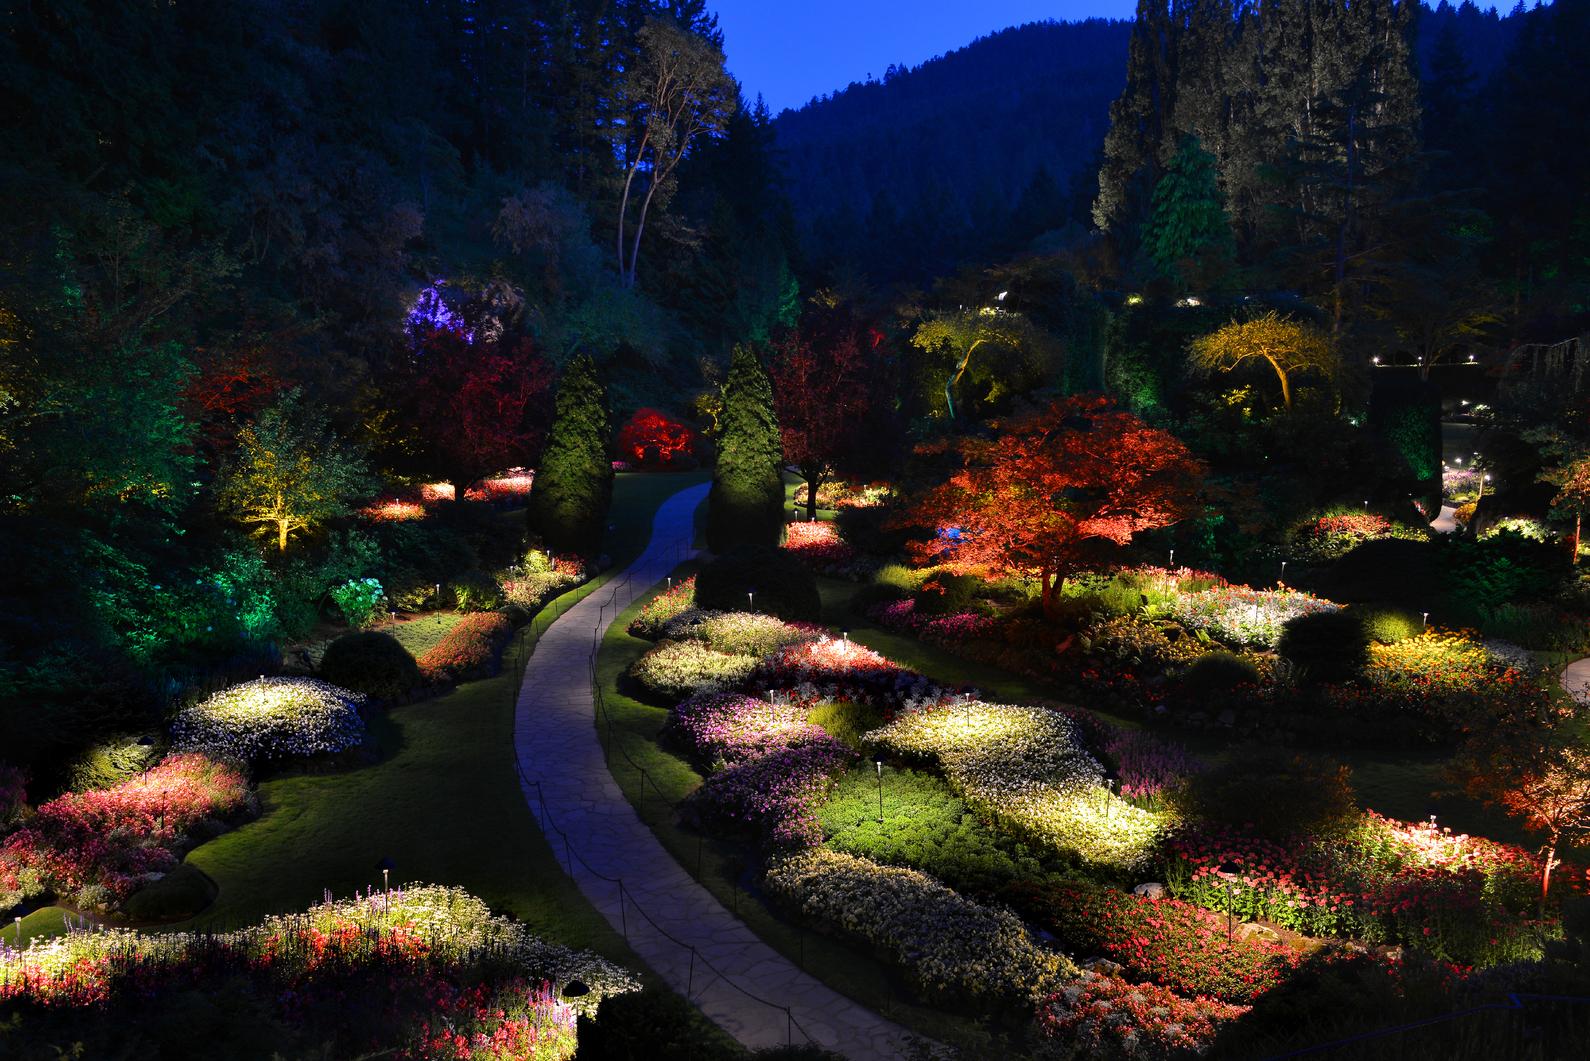 Night Illumination at The Butchart Gardens